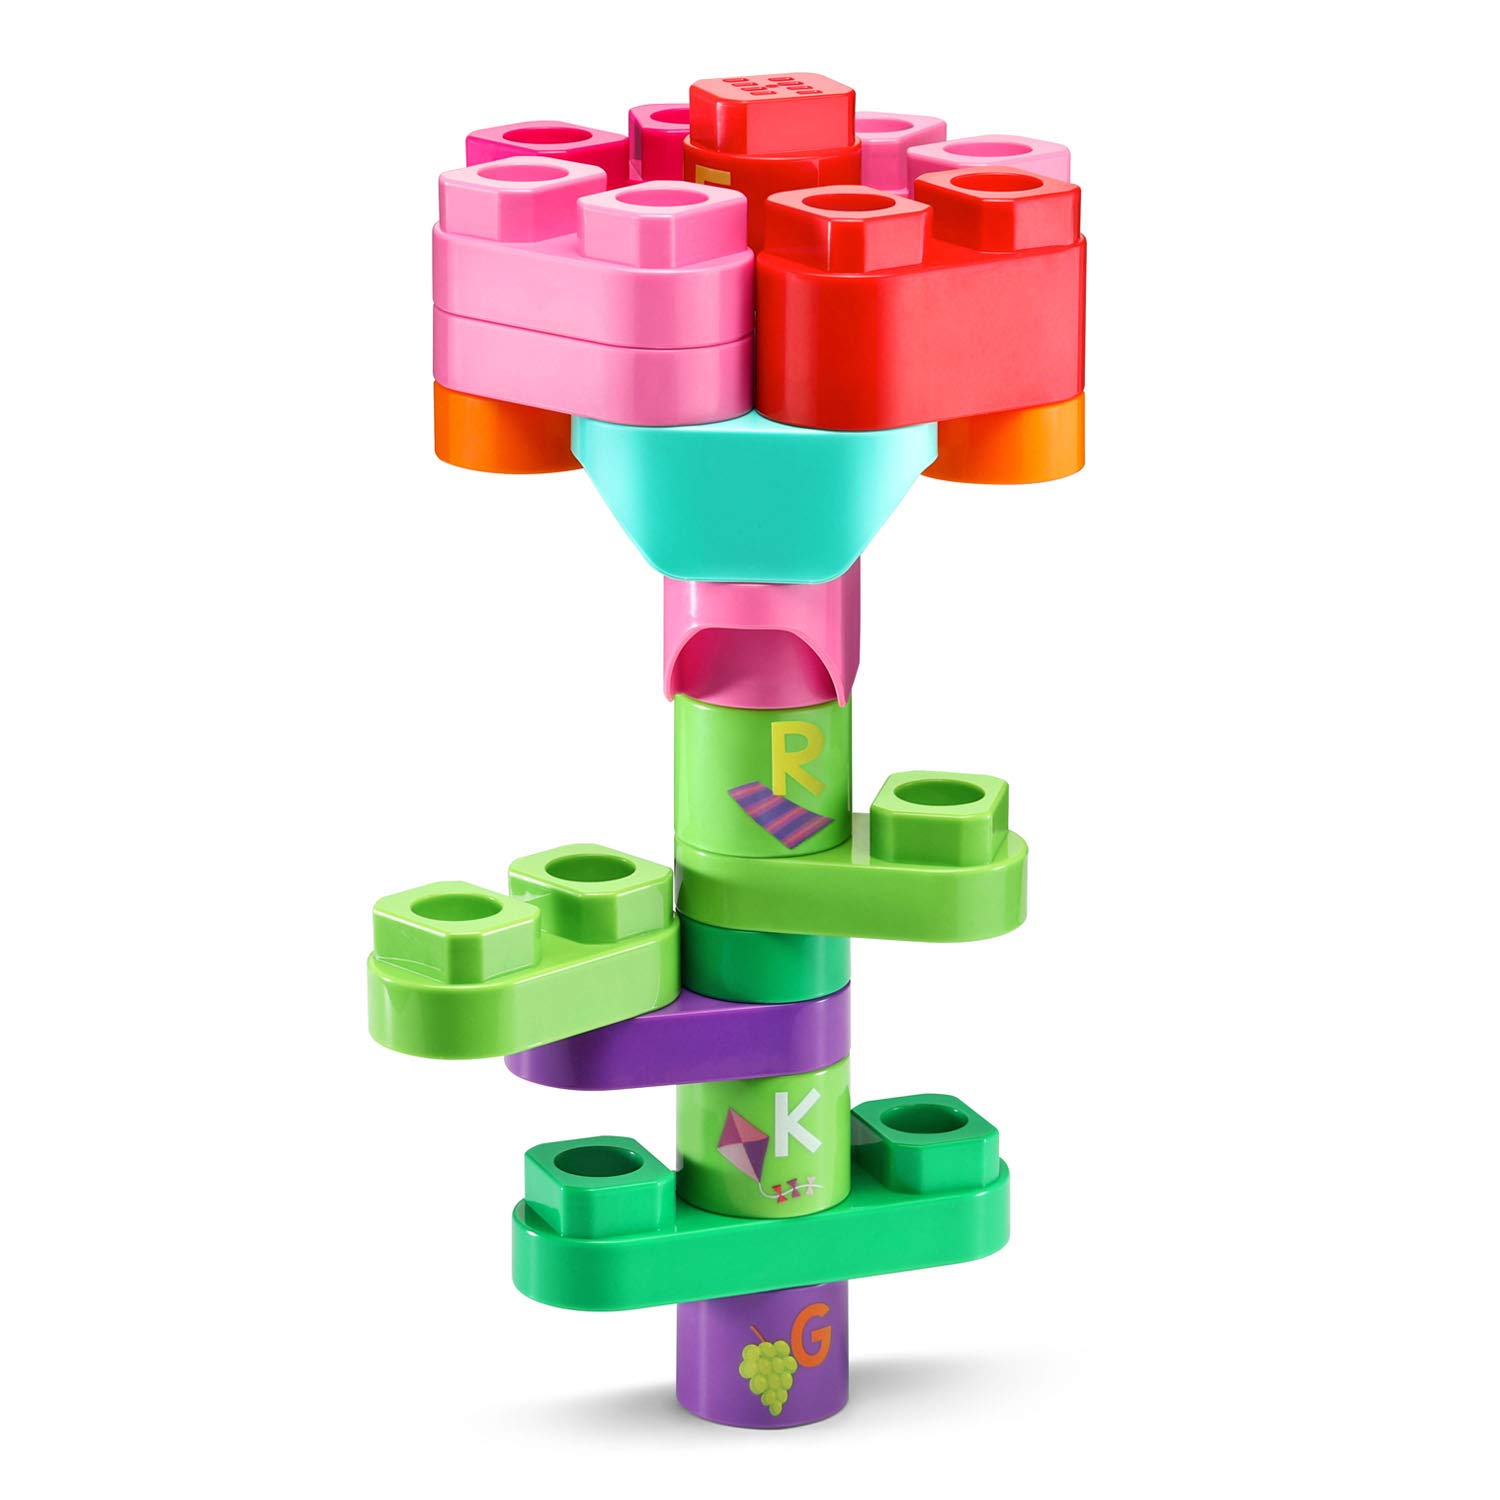 LeapFrog LeapBuilders 81-Piece Jumbo Blocks Box, Pink,24 months to 5 years